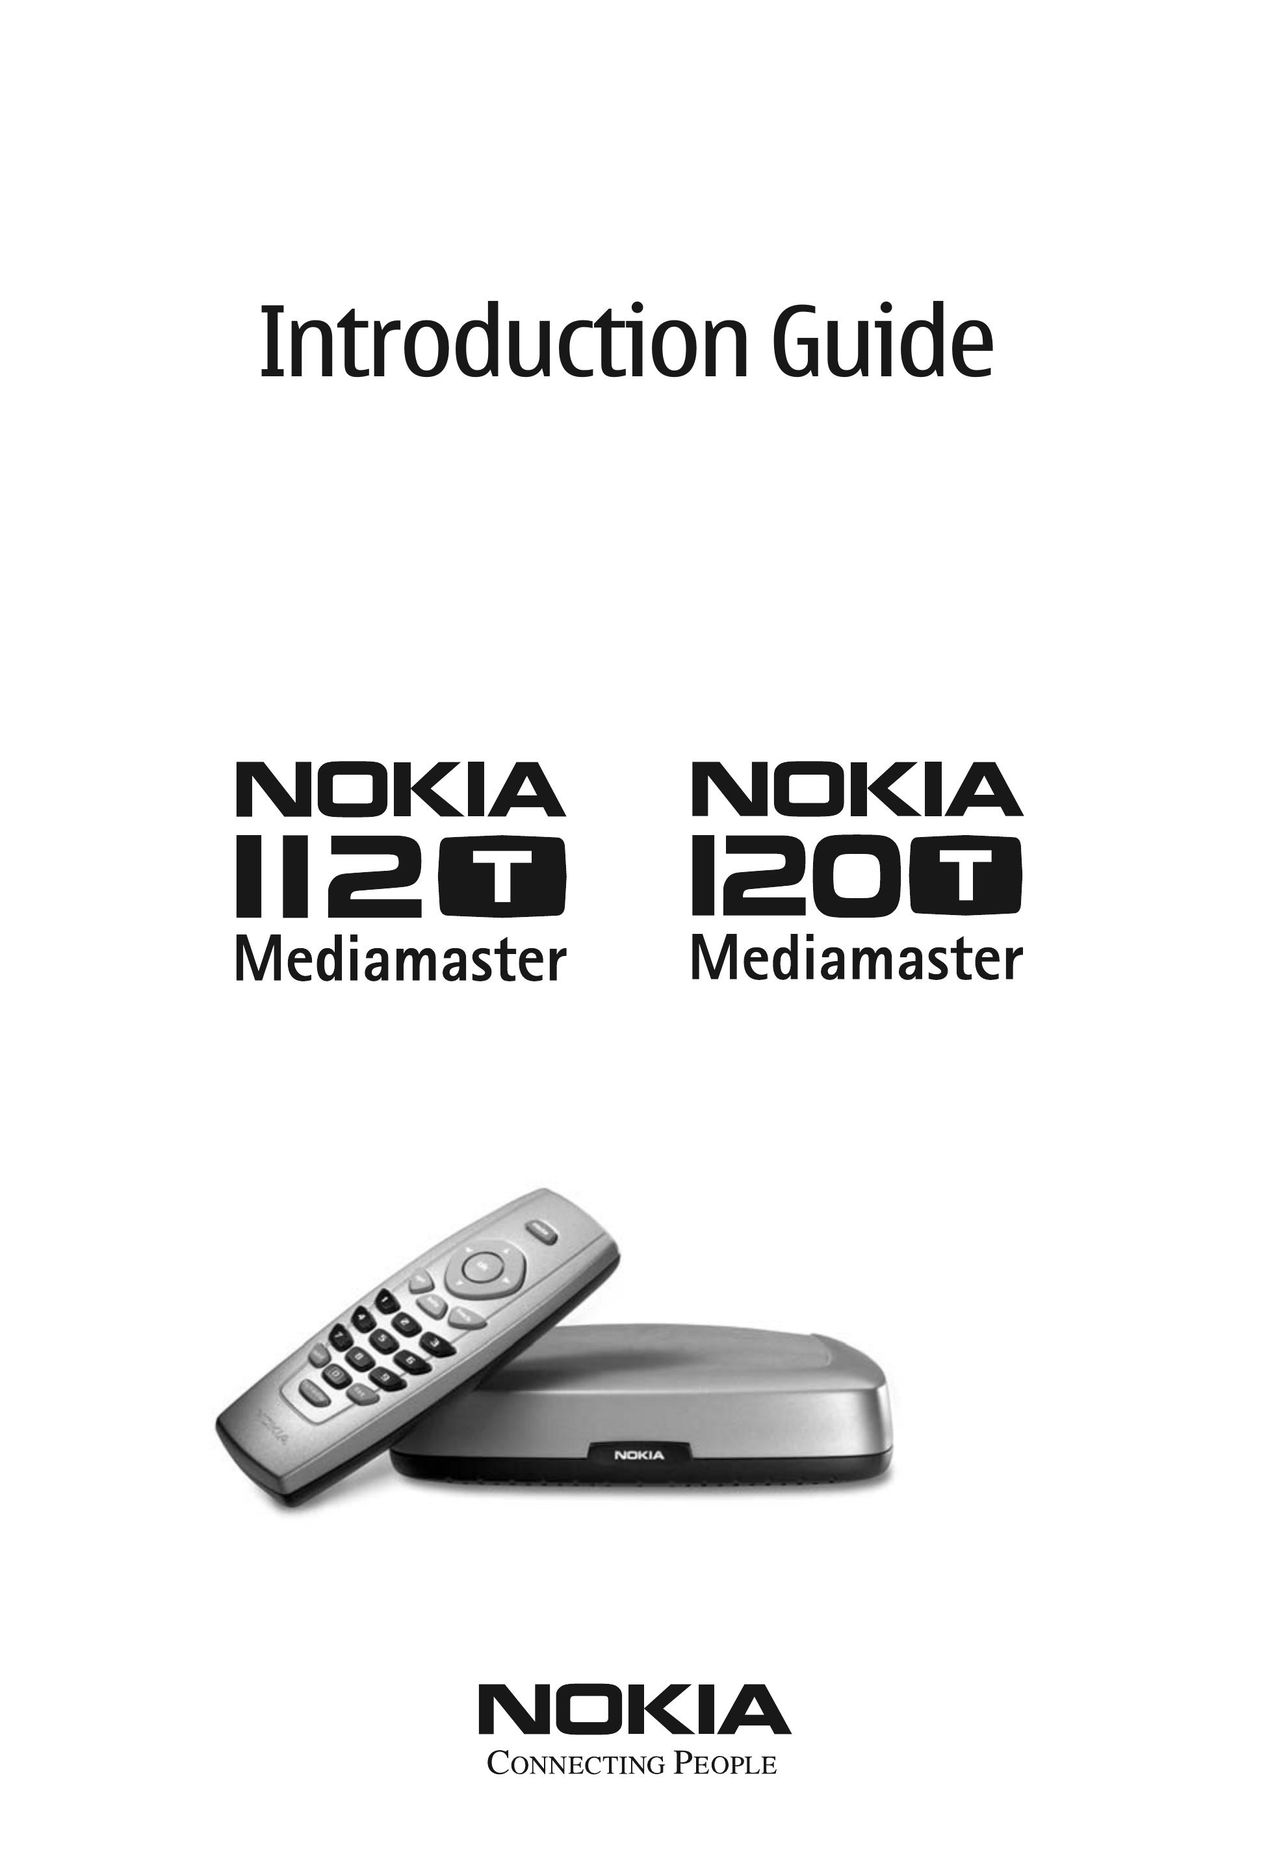 Nokia 120 T Satellite TV System User Manual